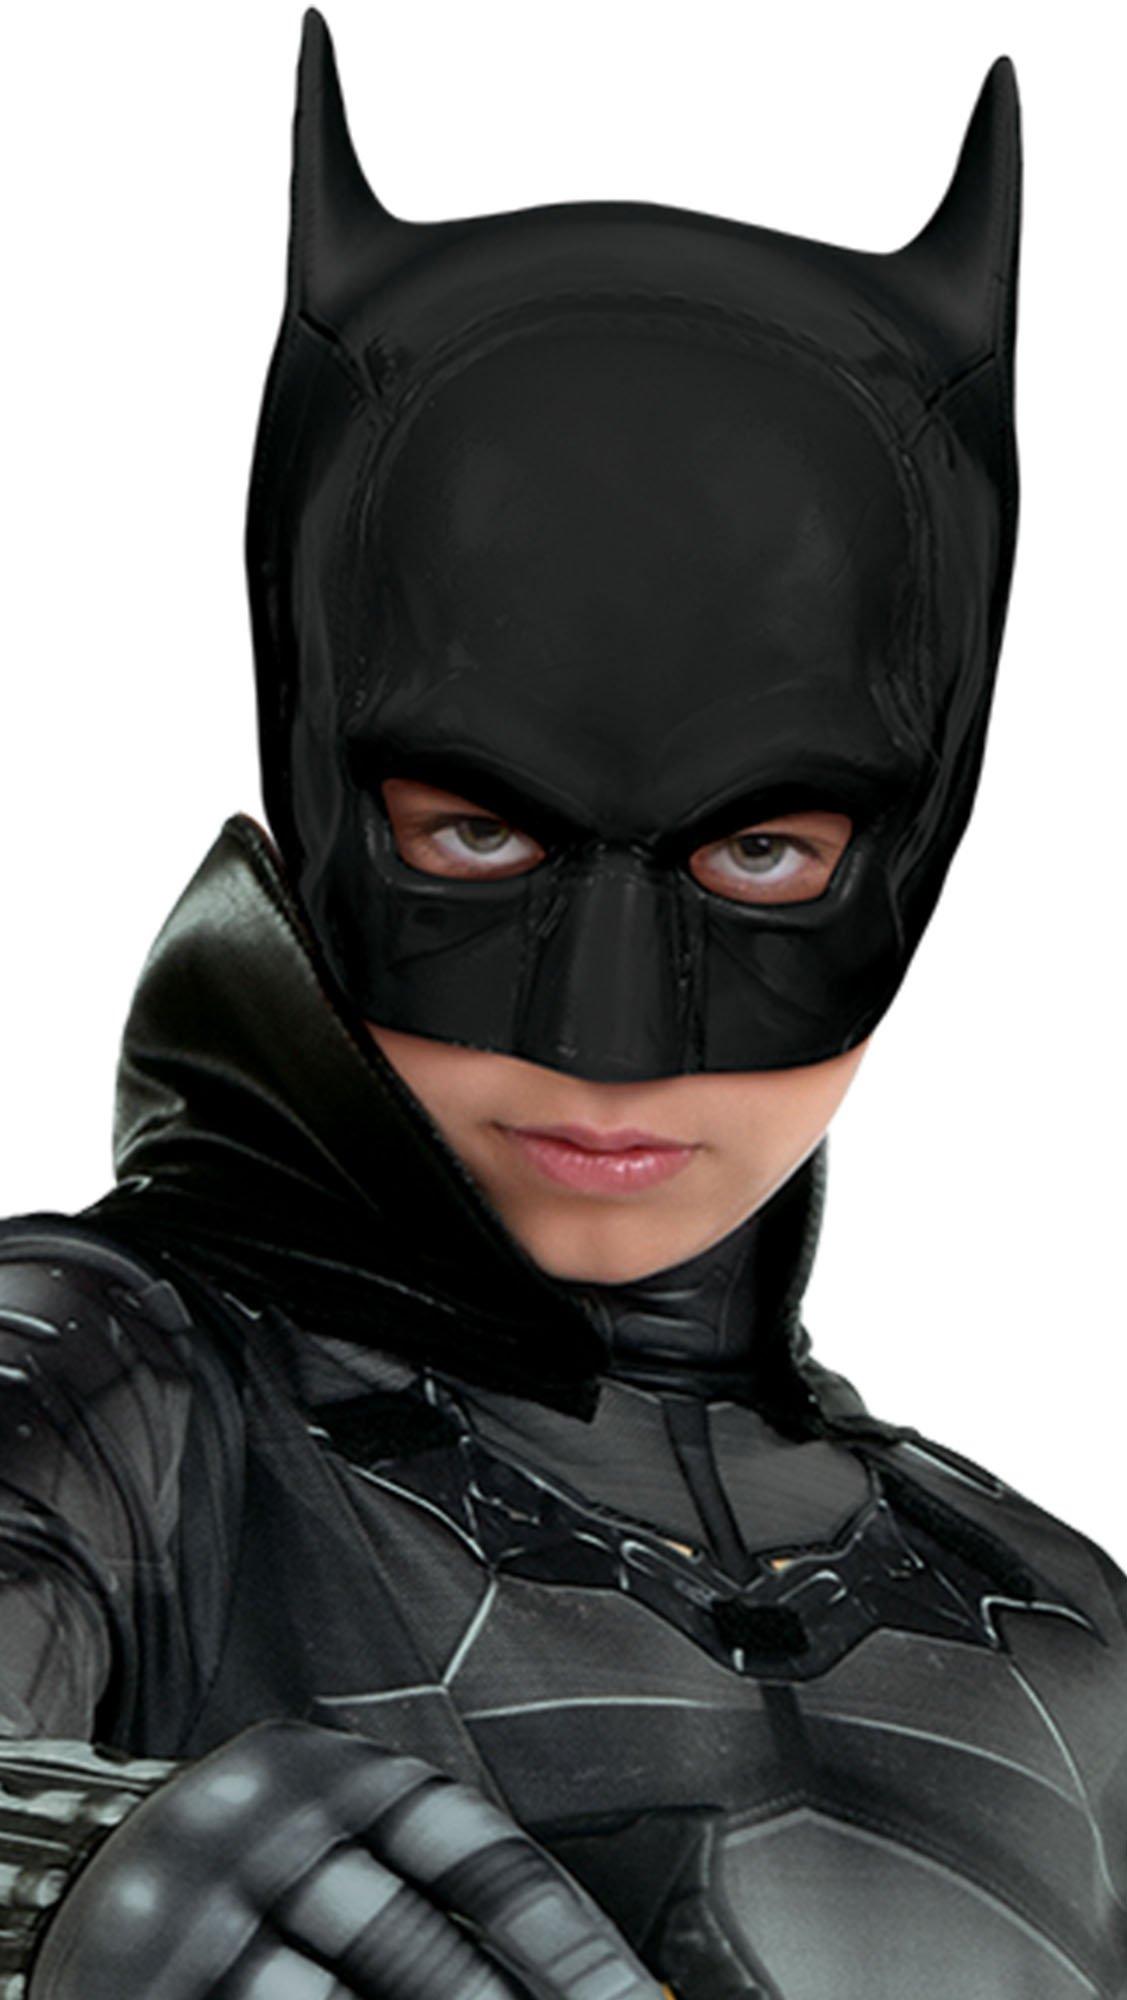 My batman costume for cosplay. custom design ,based on arkham